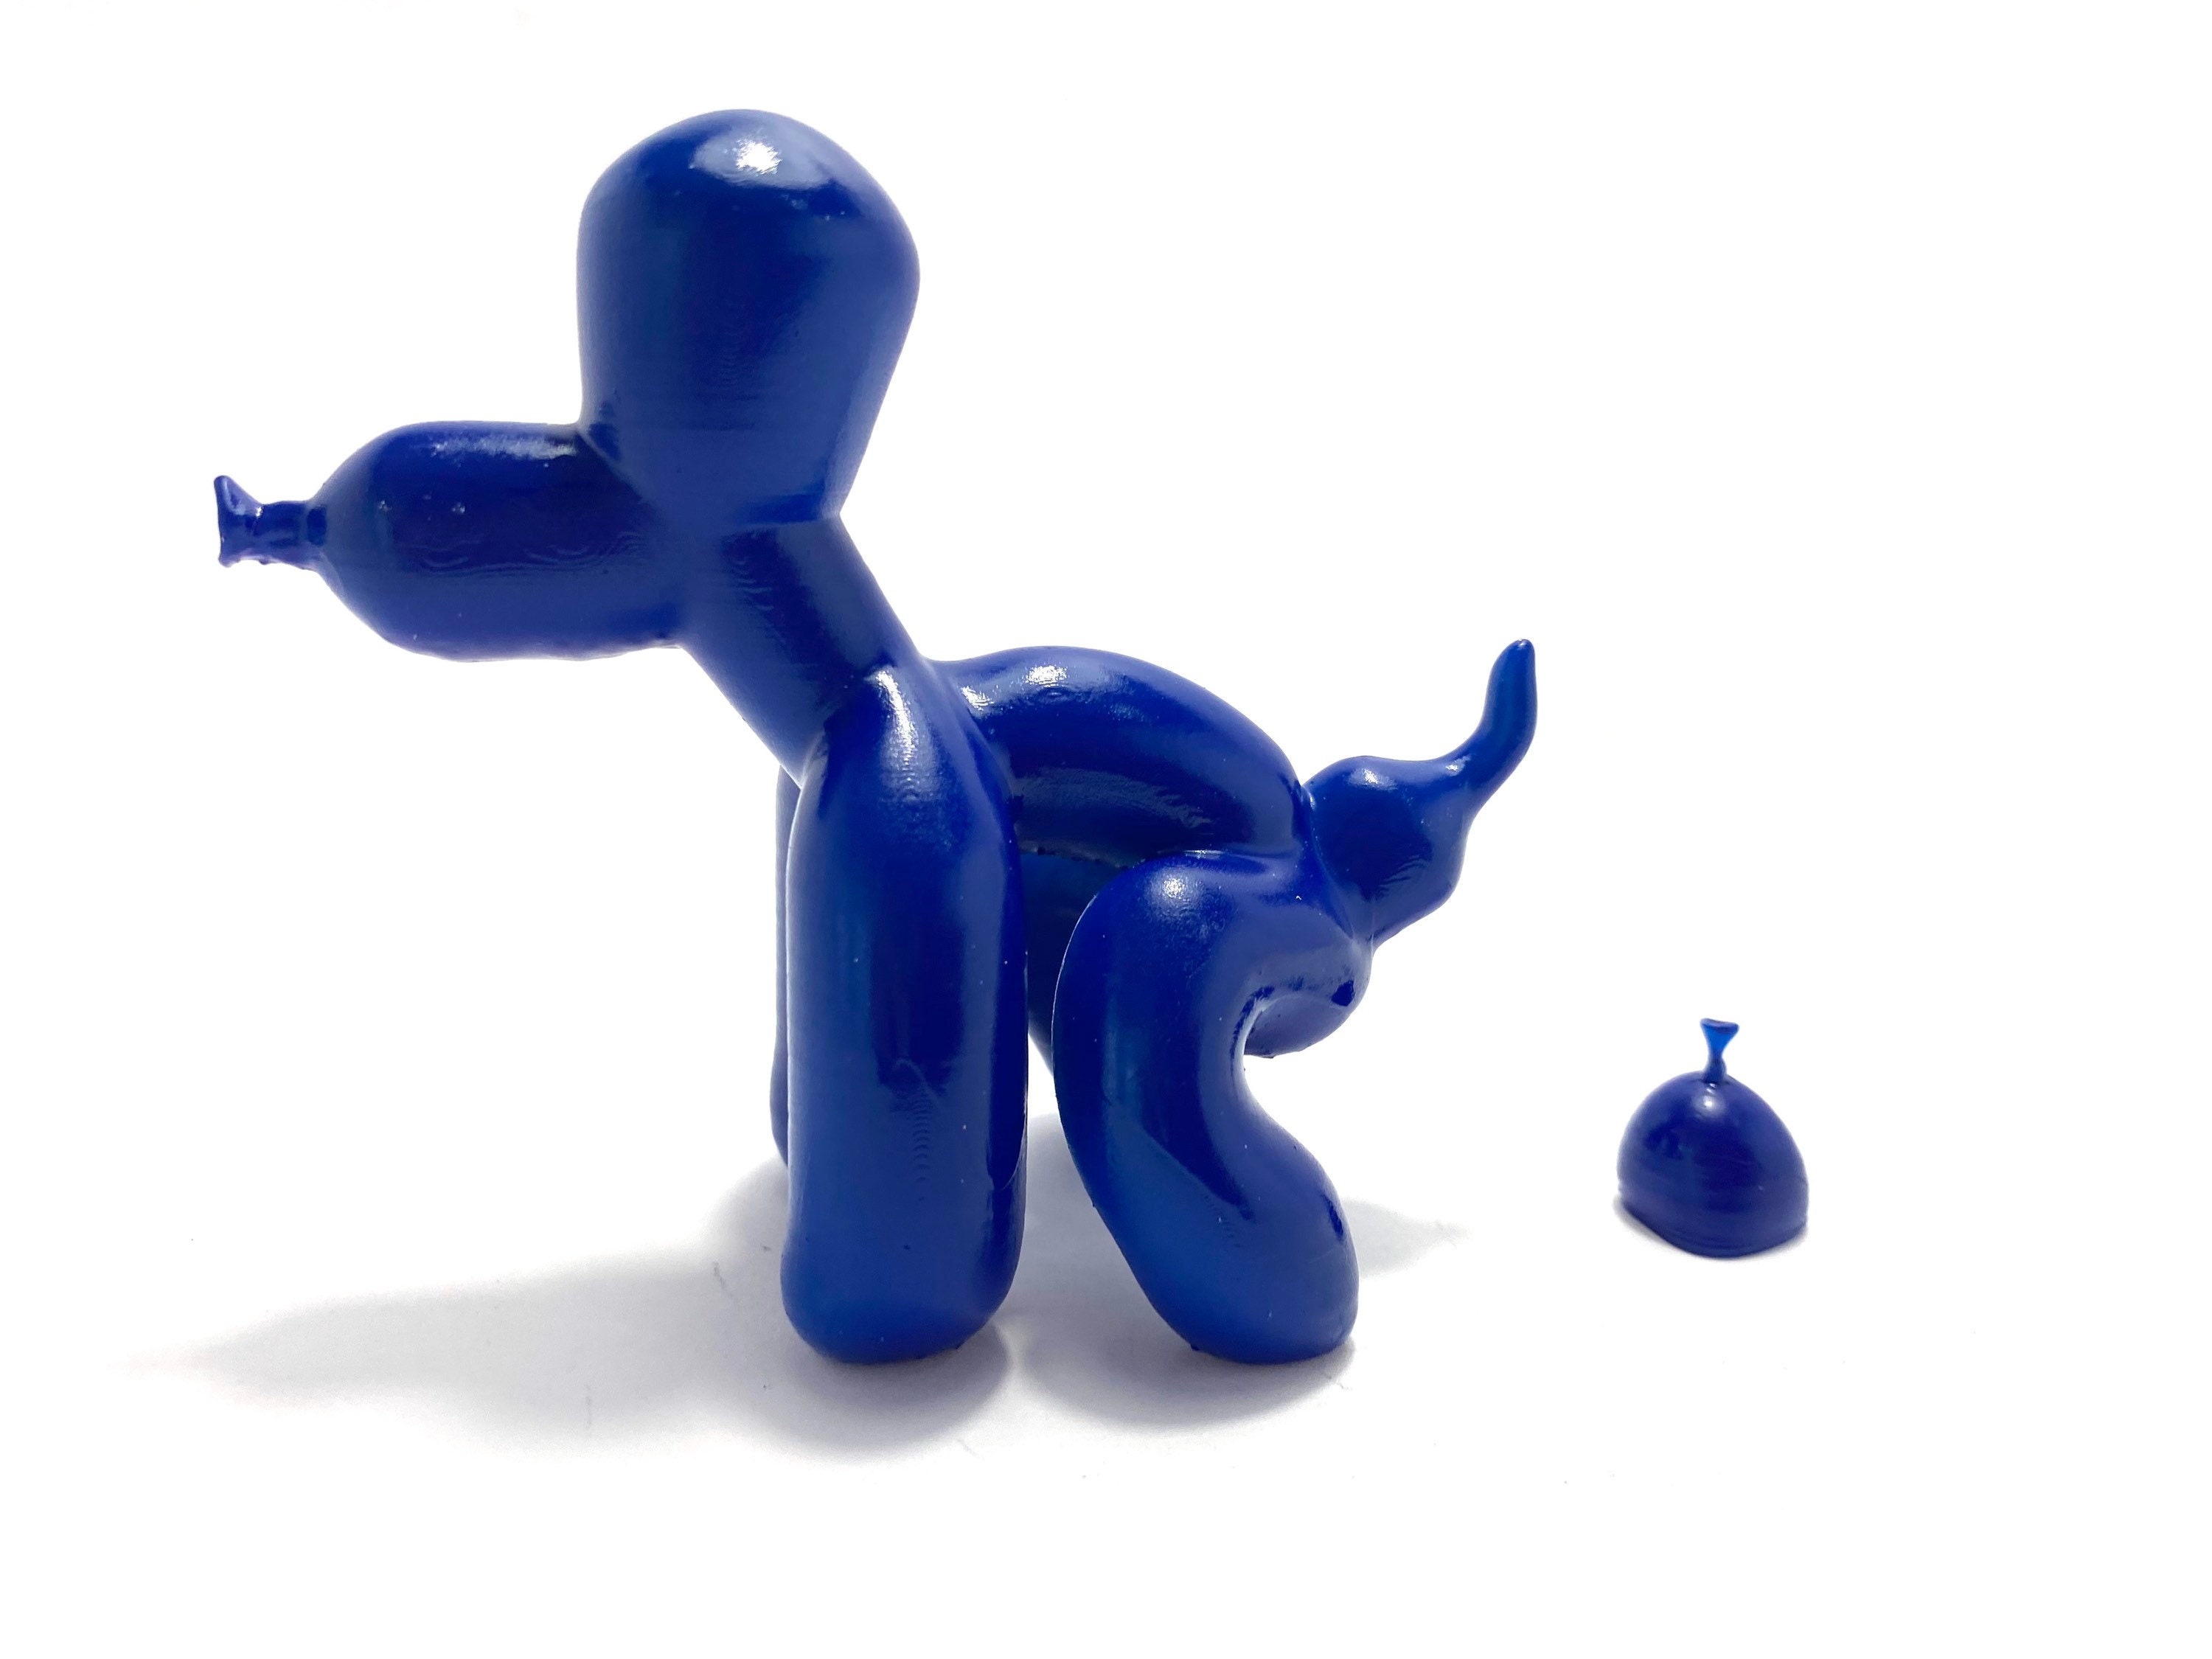 Pooping balloon dog art Statue 3D Print figure design figurine | Etsy